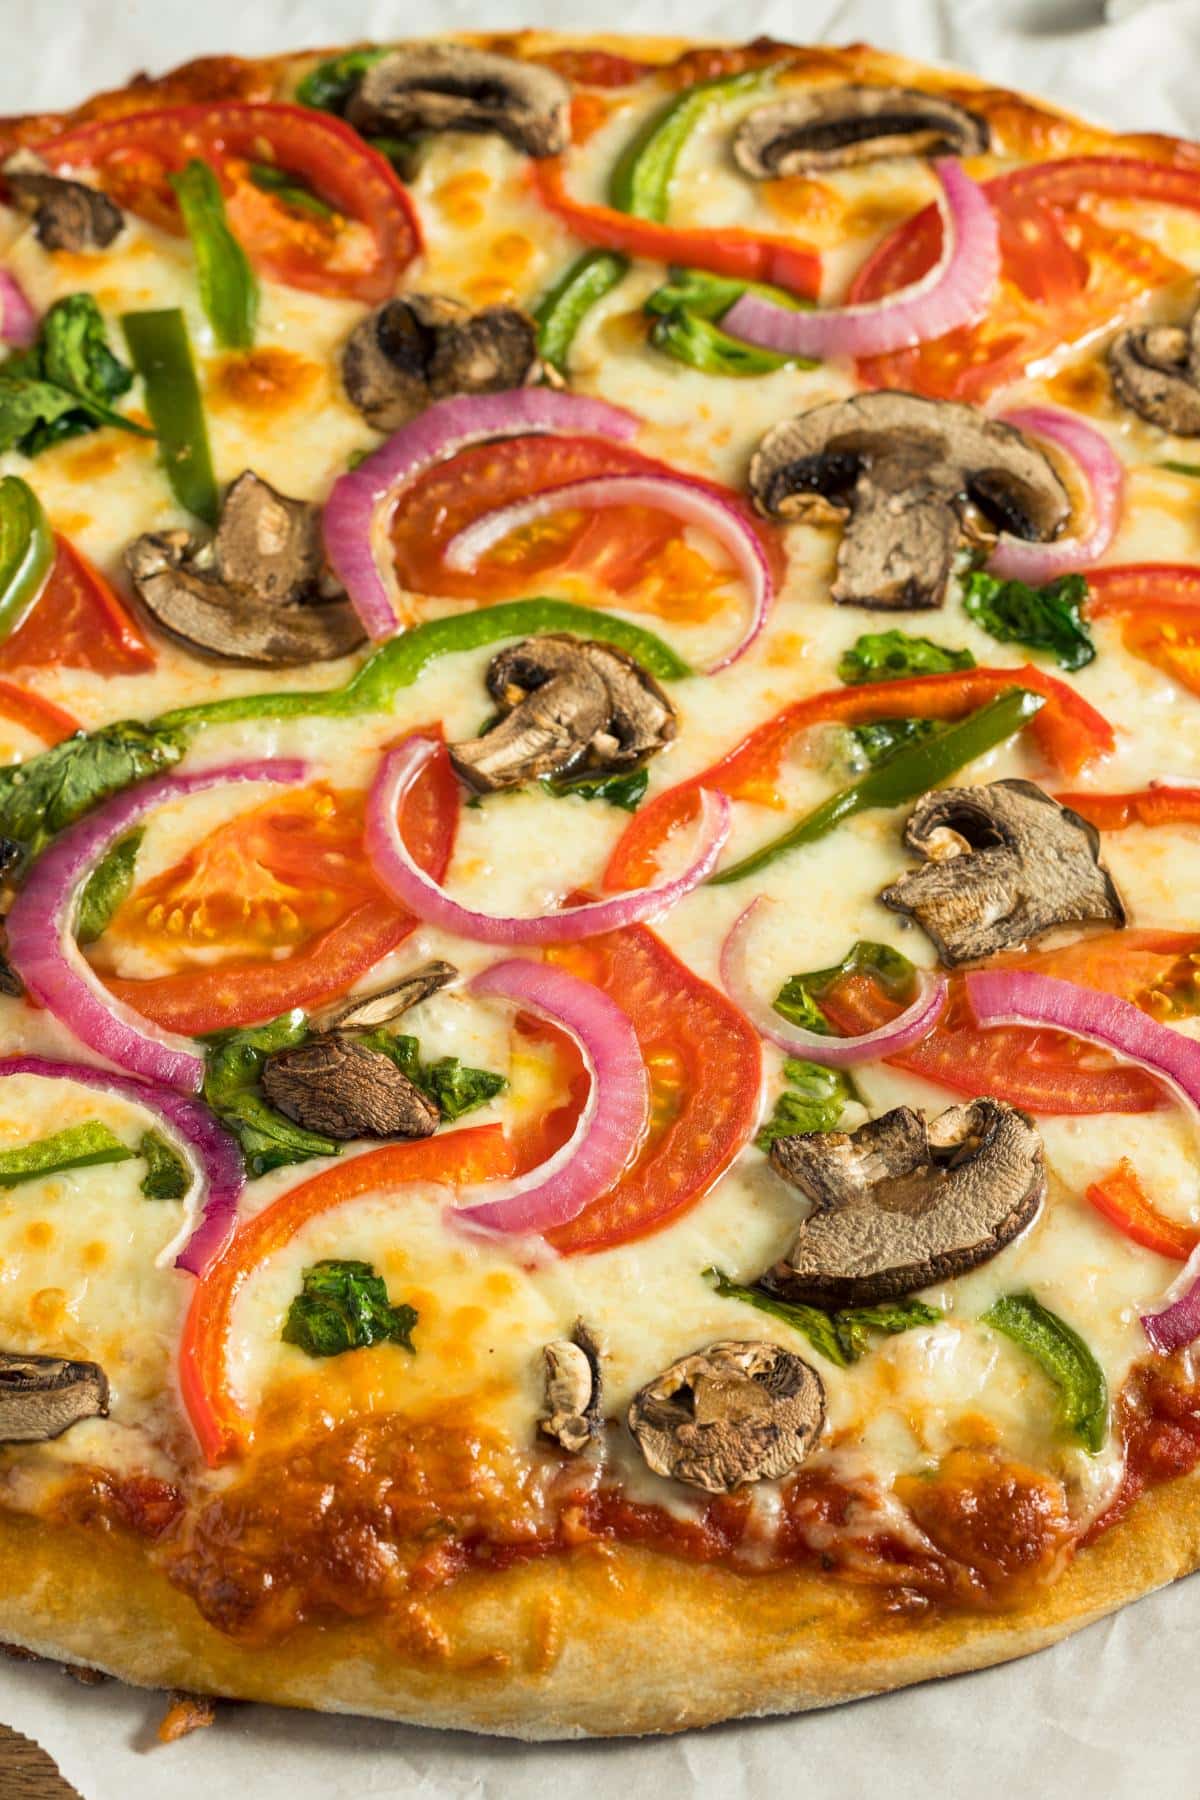 A vegan pizza with veggies on it.